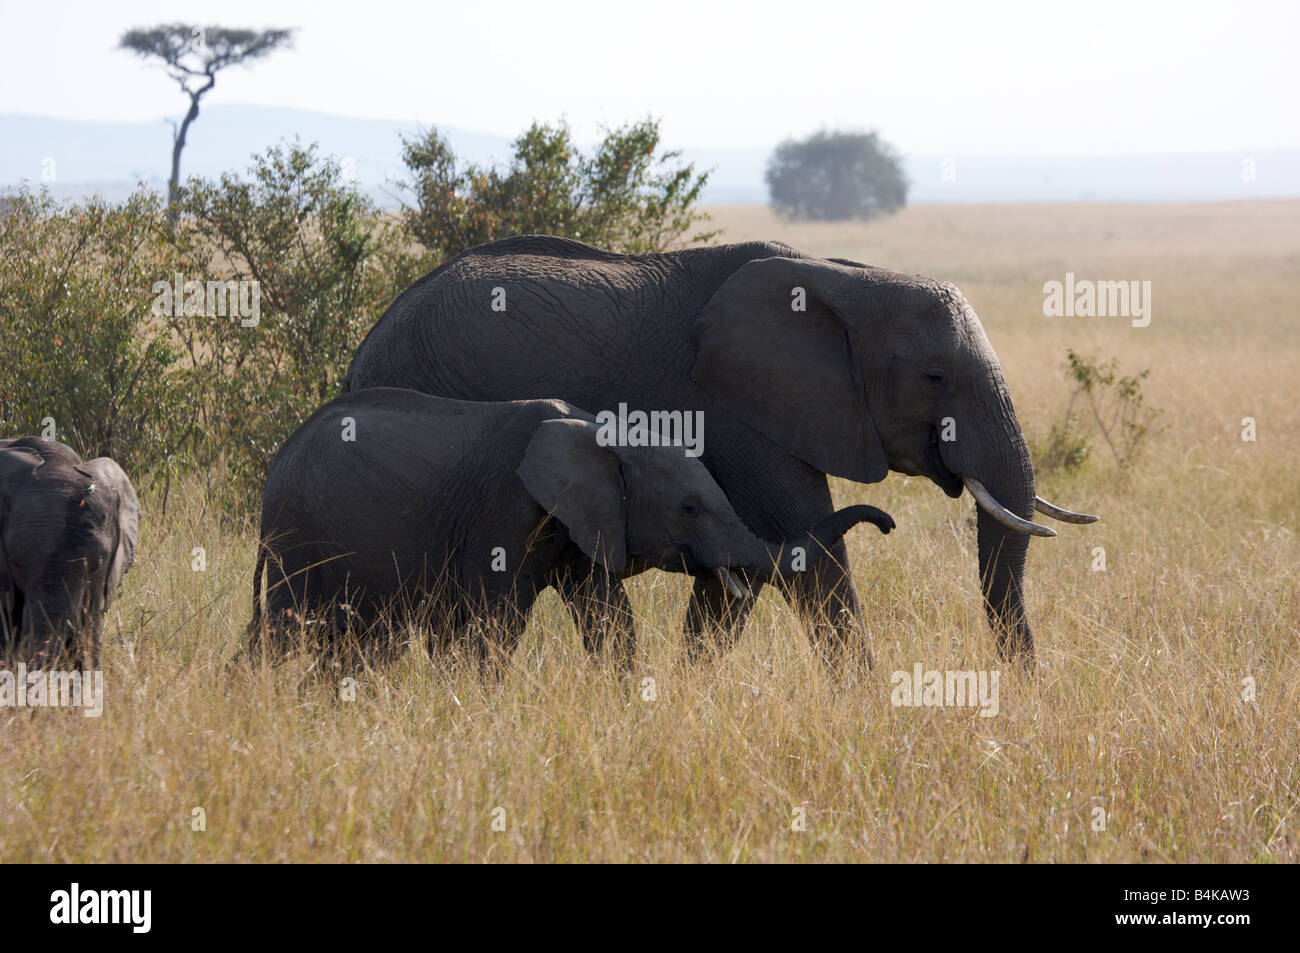 African elephant with baby elephant in Masai Mara, Kenya, East Africa Stock Photo